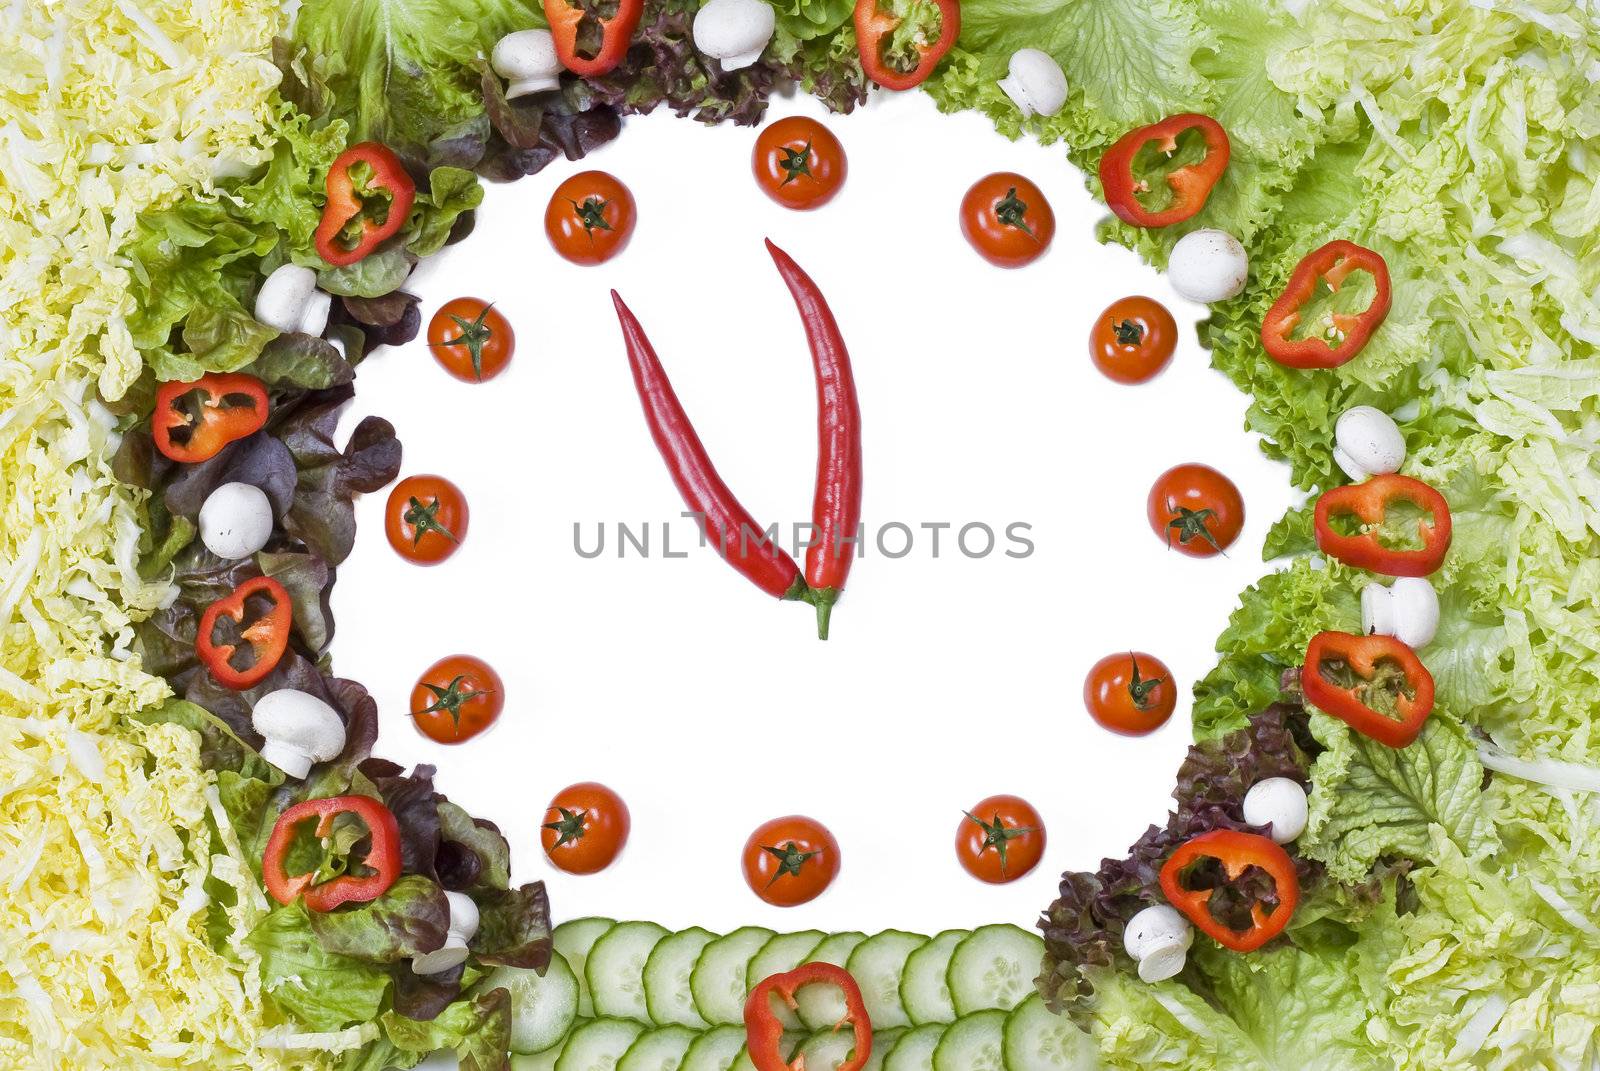 Vegetable clock by caldix